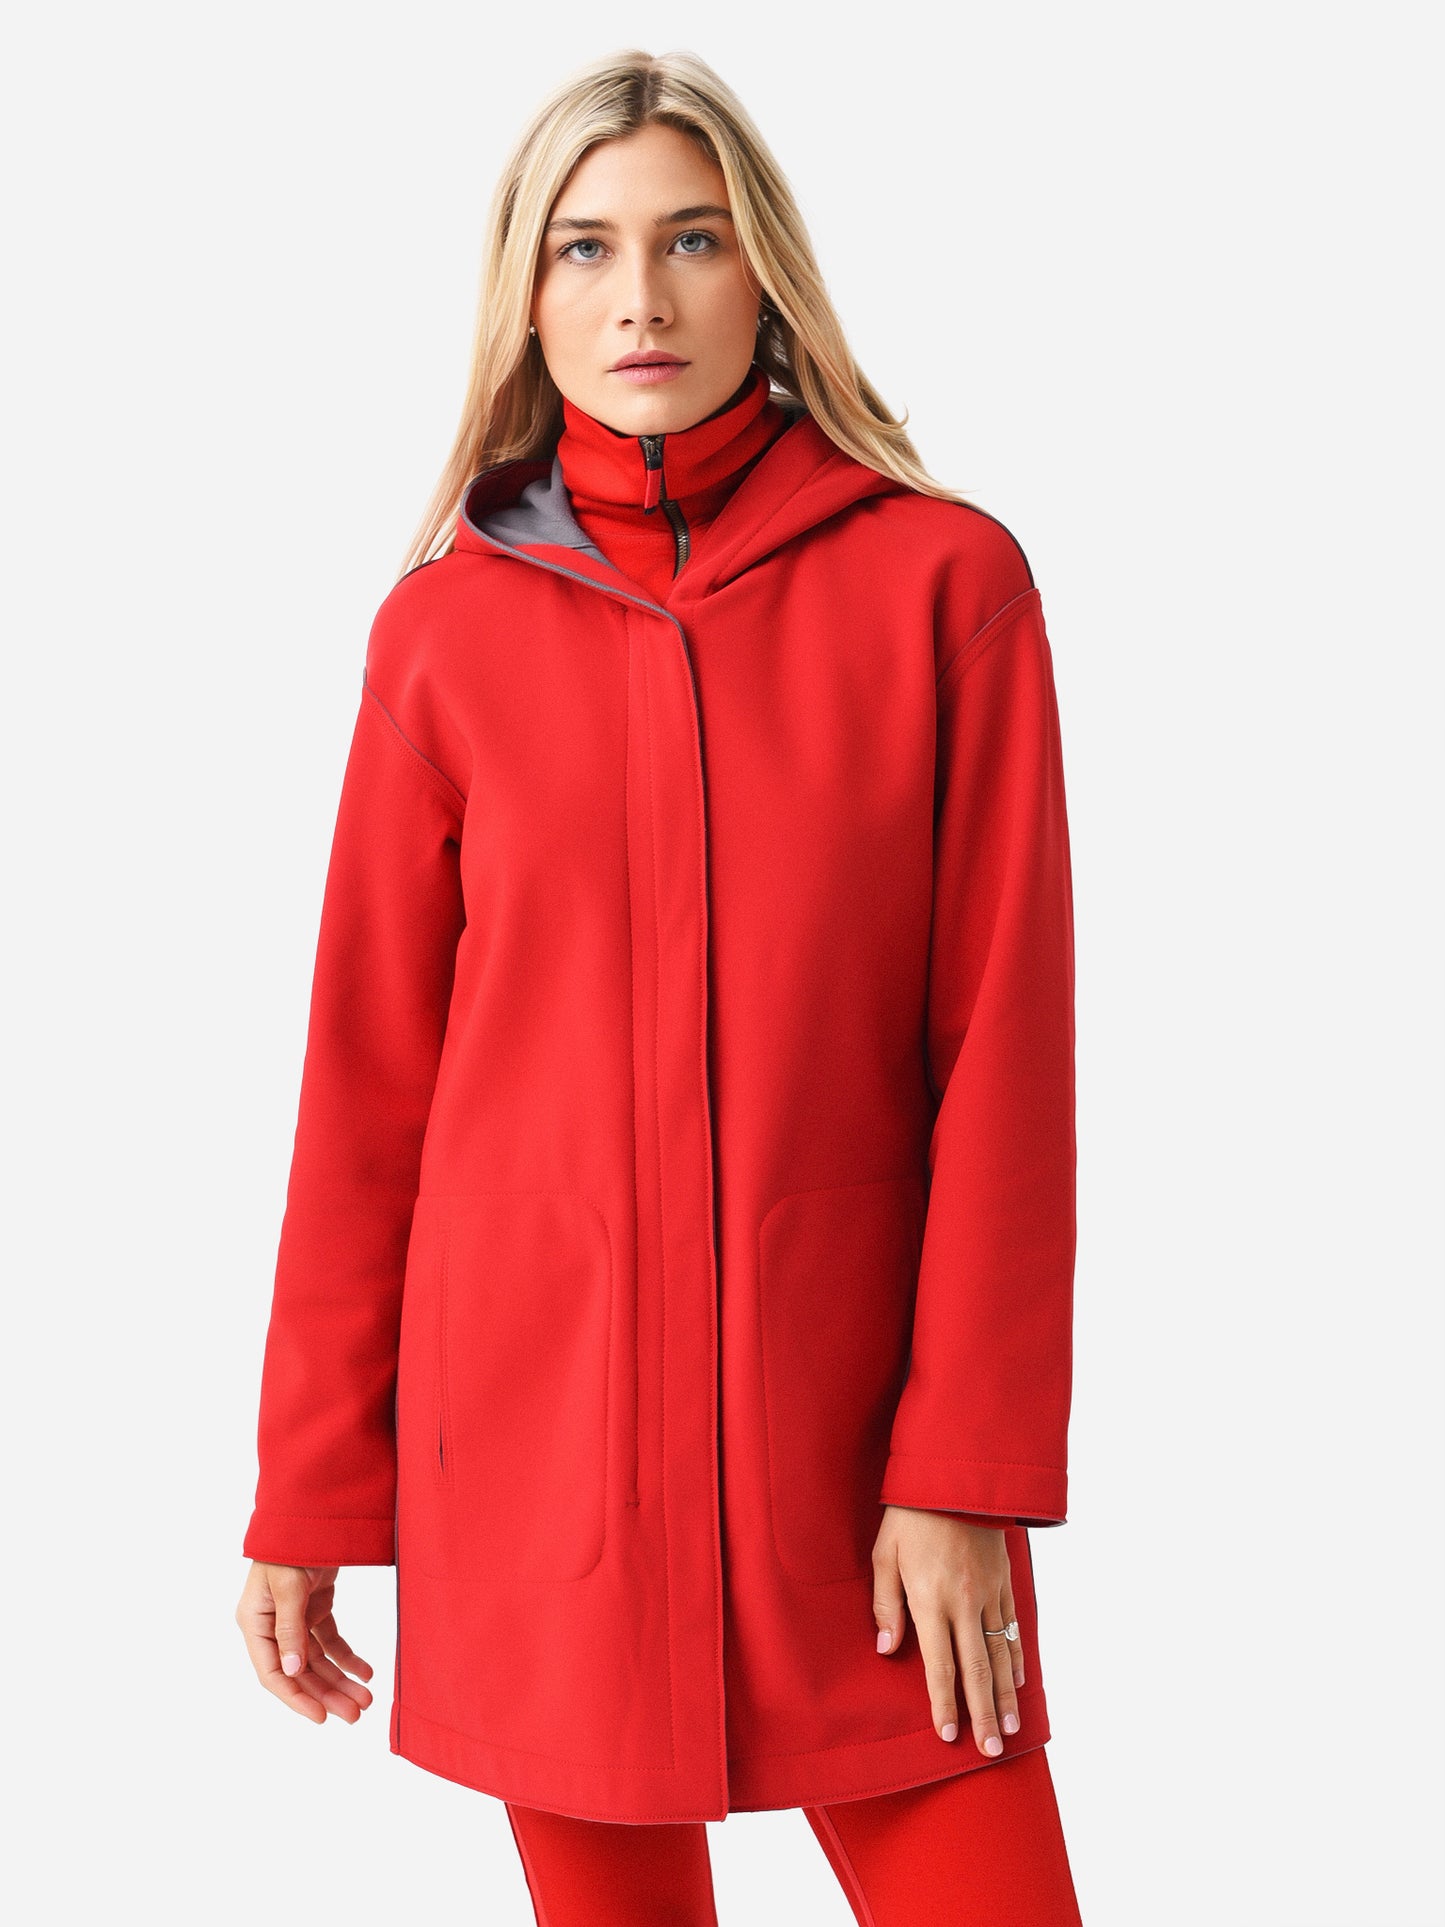 Frauenschuh Women's Olivia Soft Shell Rain Jacket